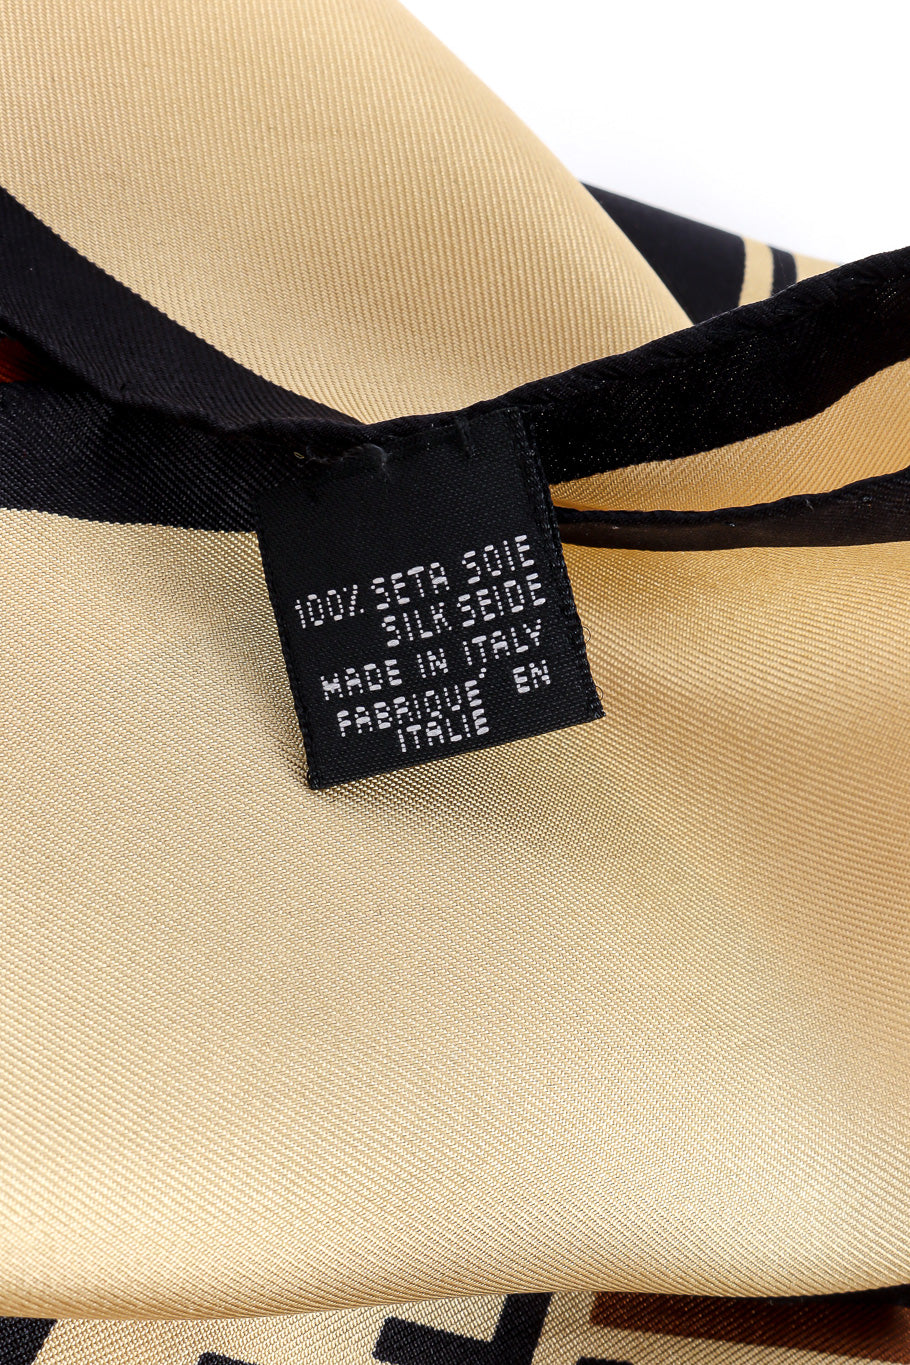 Retro print graphic scarf by Fendi Photo Care label Details. @recessla